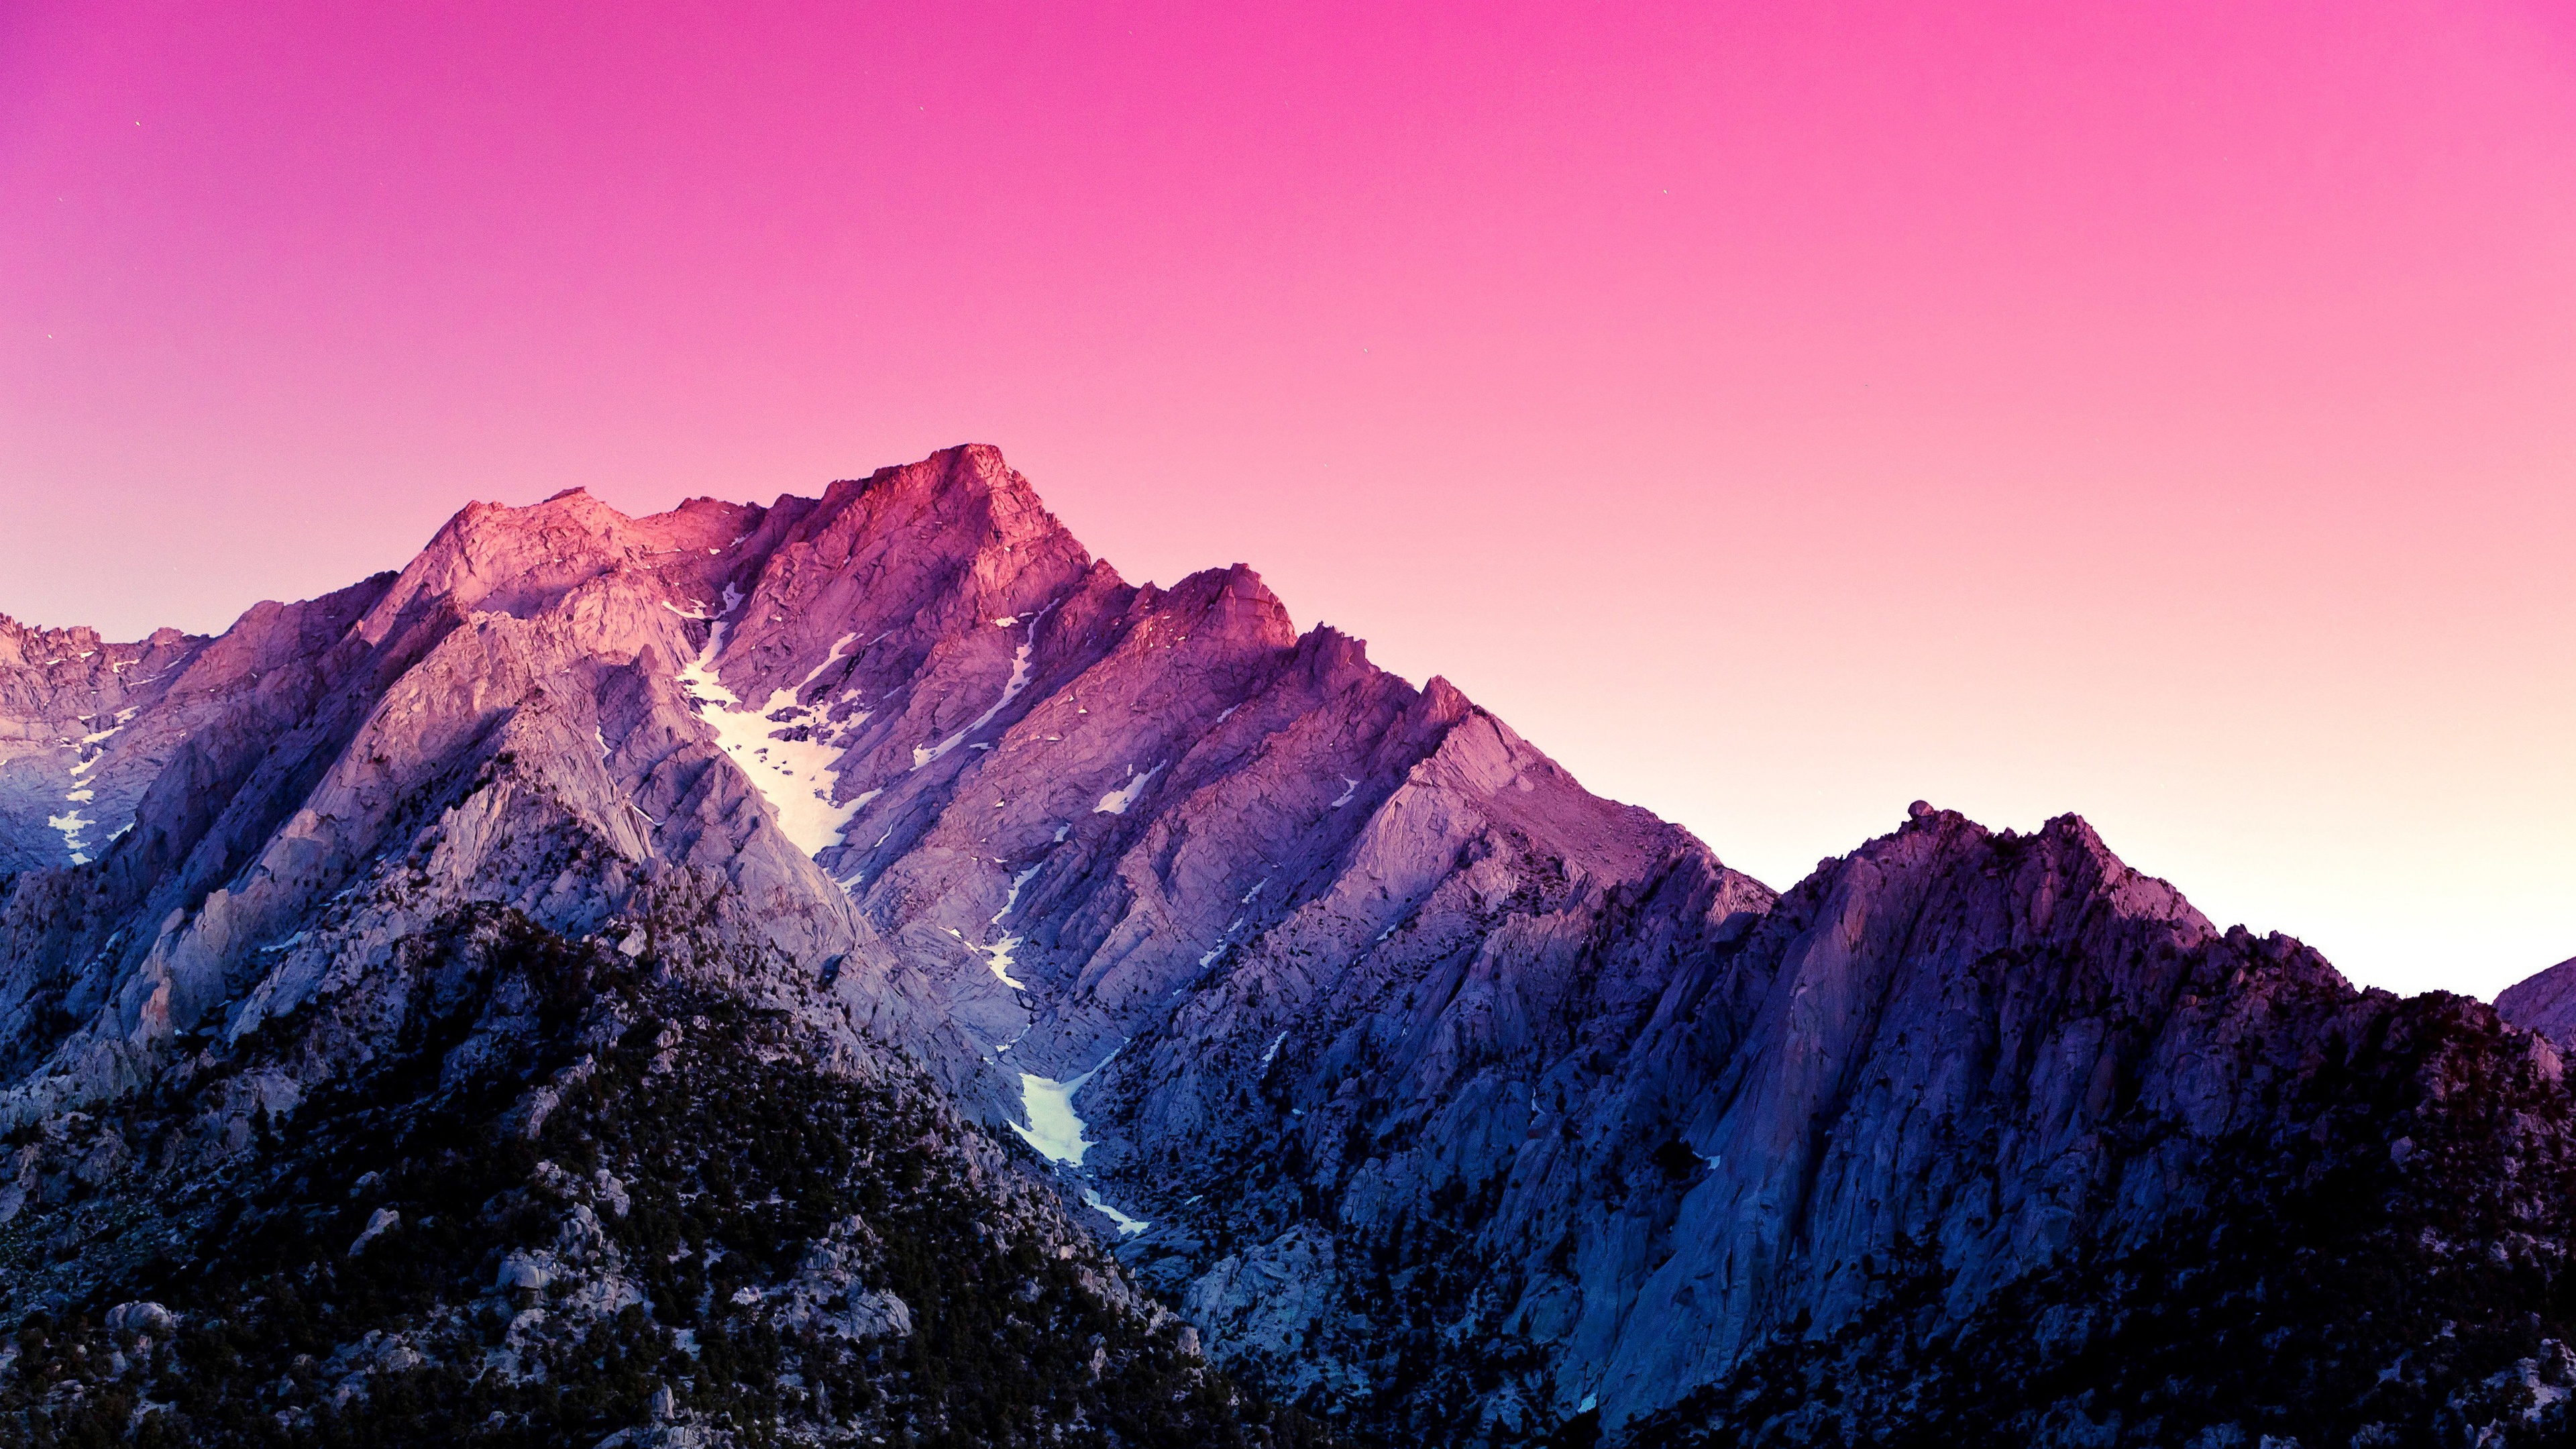 wallpaper picture download,mountainous landforms,mountain,mountain range,sky,nature